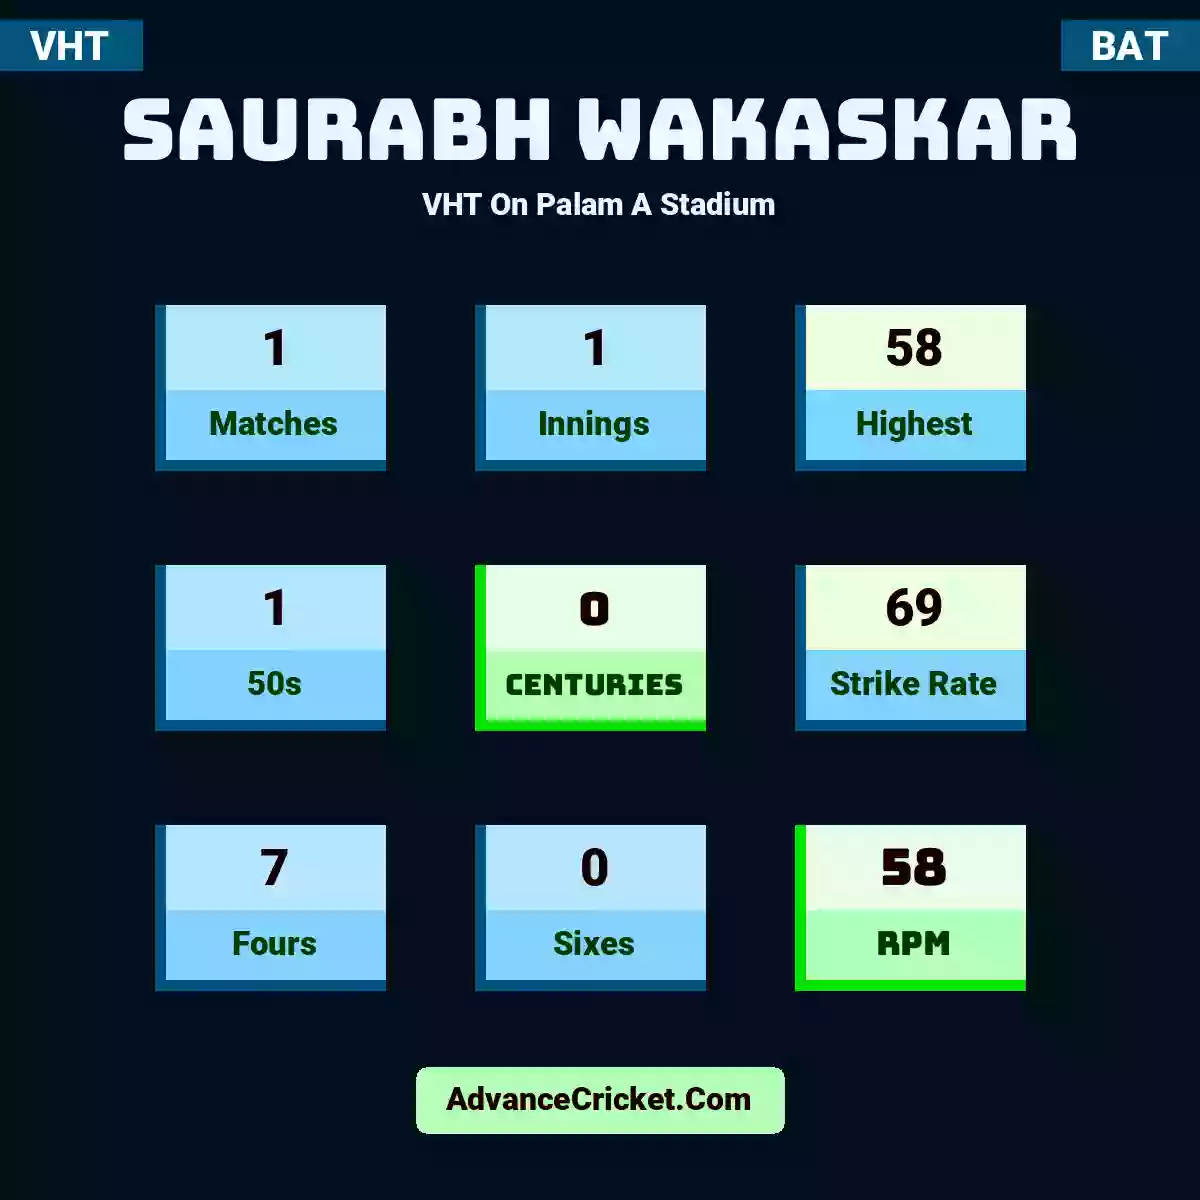 Saurabh Wakaskar VHT  On Palam A Stadium, Saurabh Wakaskar played 1 matches, scored 58 runs as highest, 1 half-centuries, and 0 centuries, with a strike rate of 69. S.Wakaskar hit 7 fours and 0 sixes, with an RPM of 58.